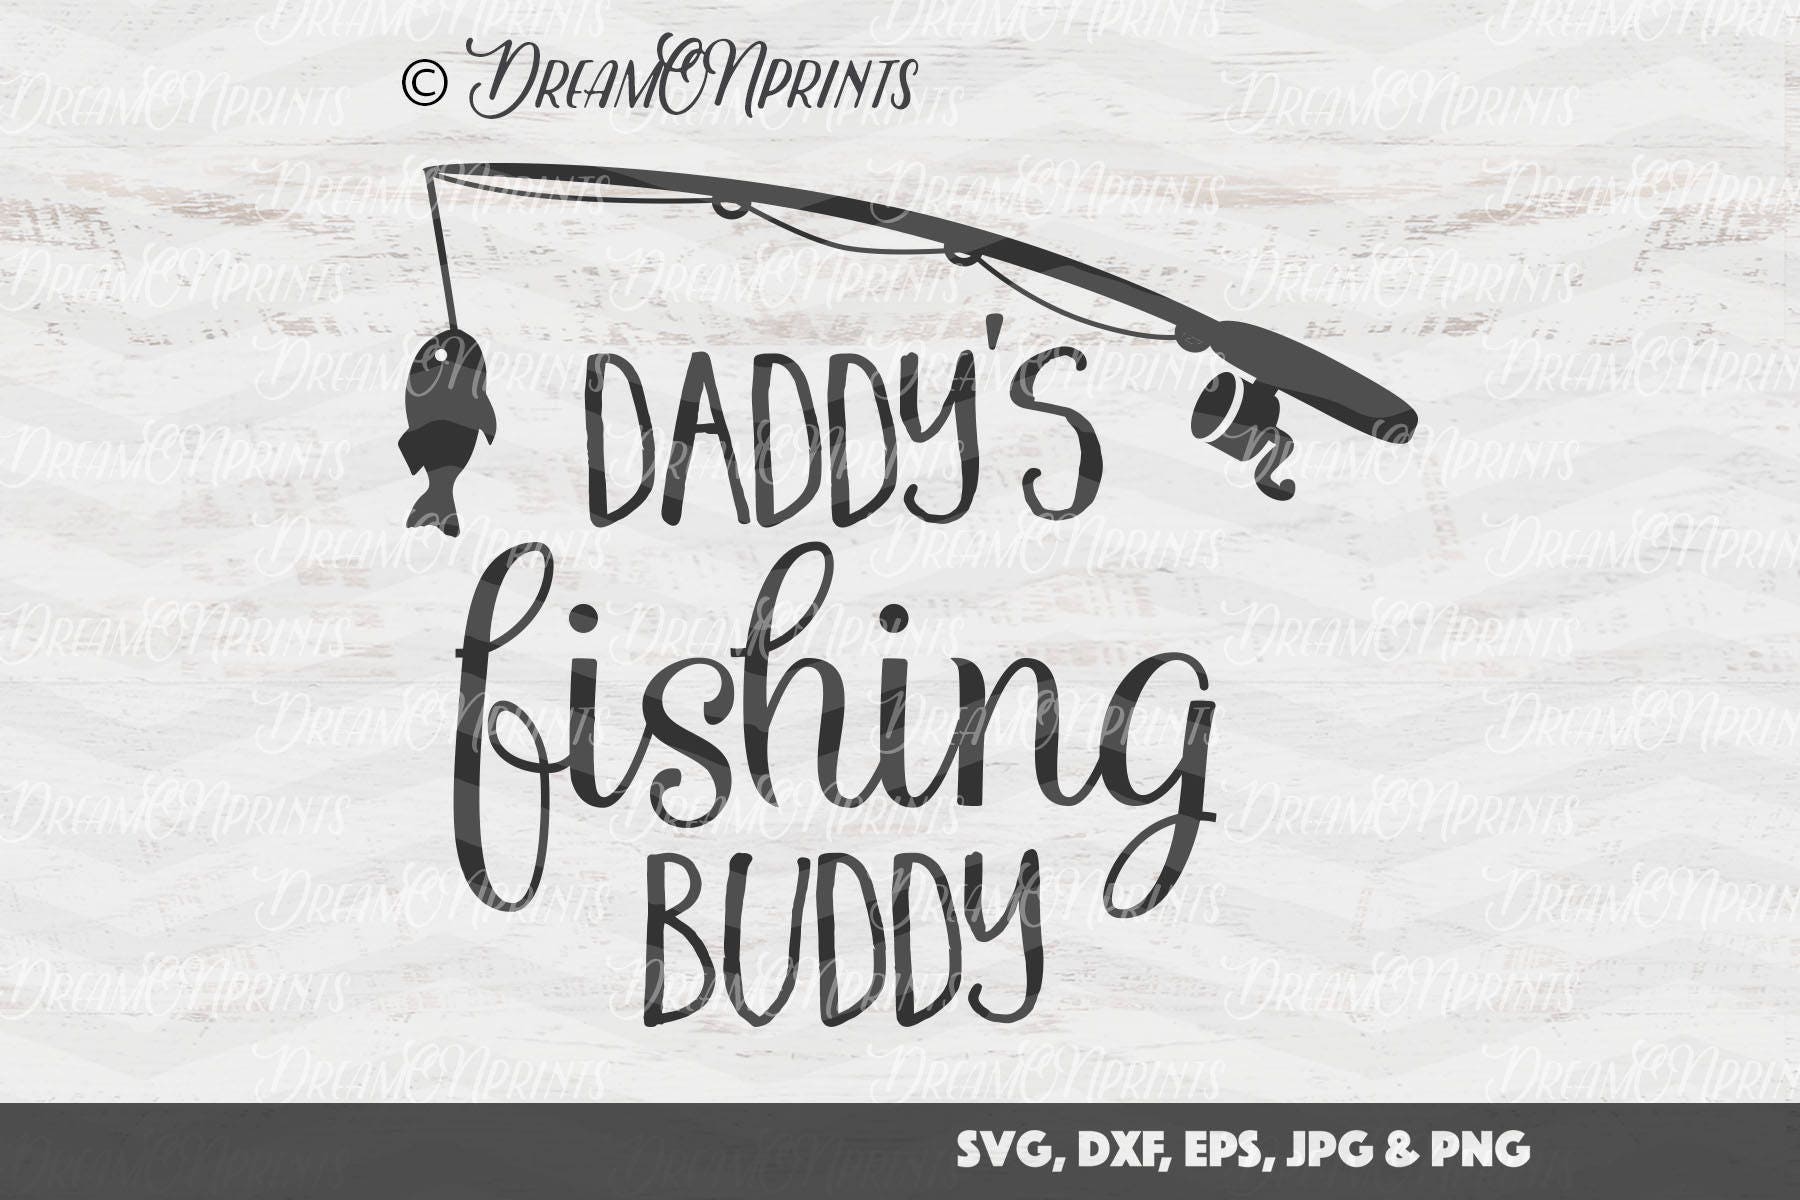 Free Free 123 Fishing Buddy Svg SVG PNG EPS DXF File